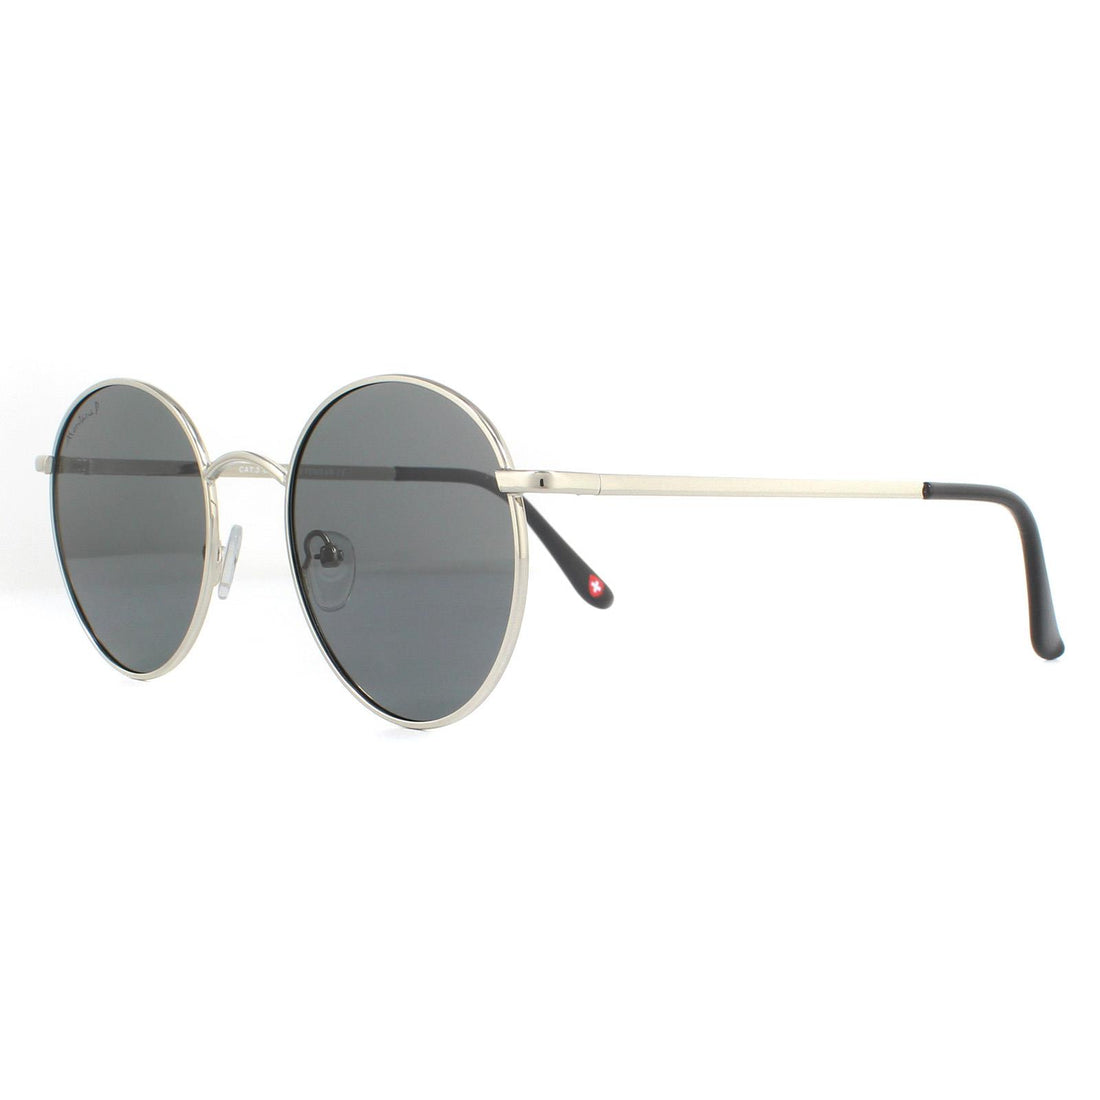 Montana Sunglasses MP85 A Silver Smoke Polarized